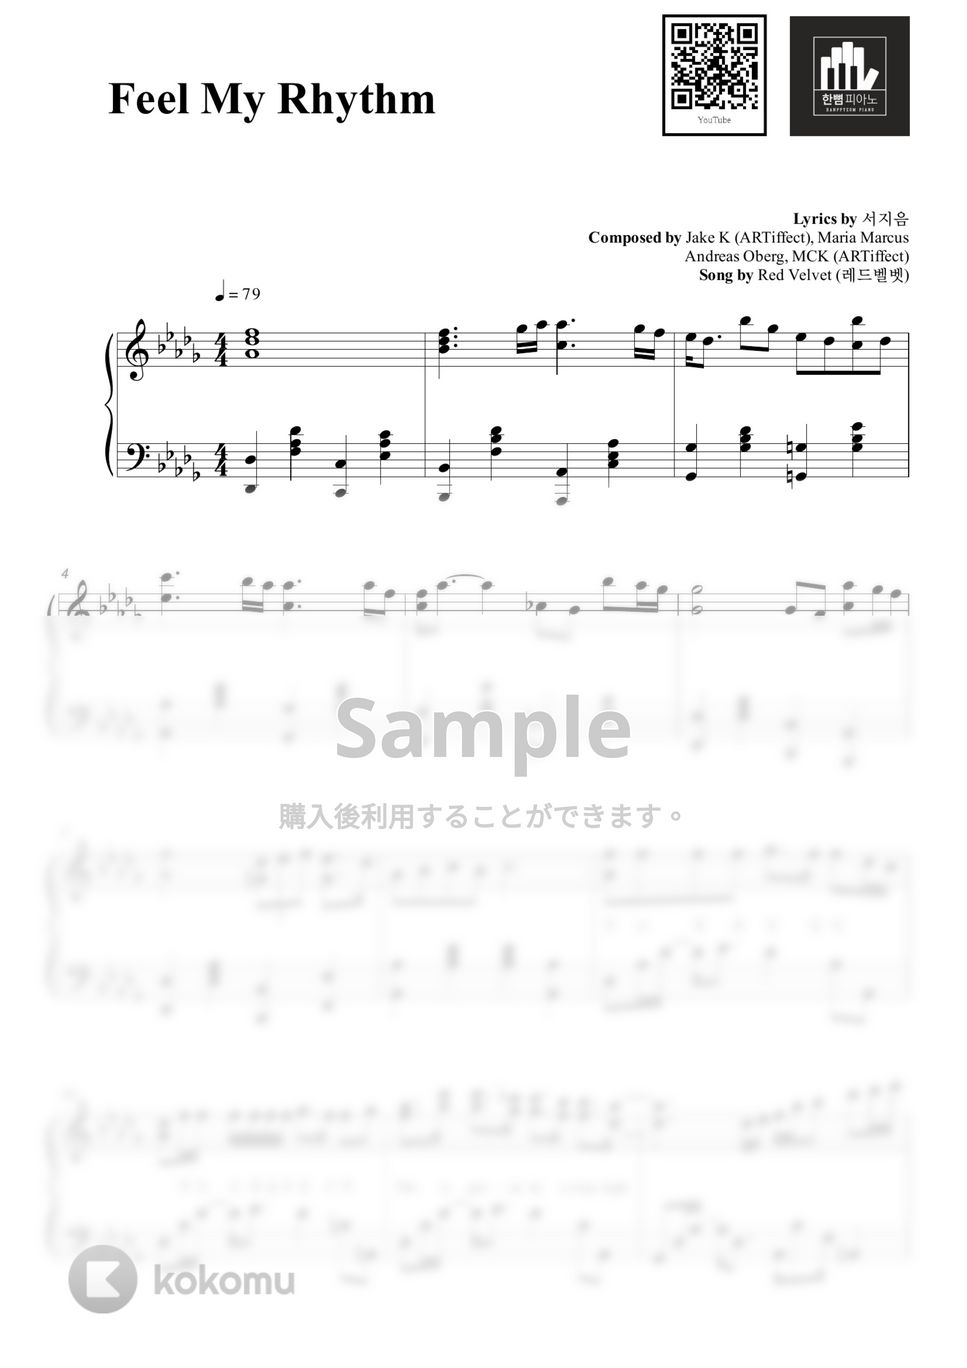 Red Velvet - Feel My Rhythm (PIANO COVER) by HANPPYEOMPIANO